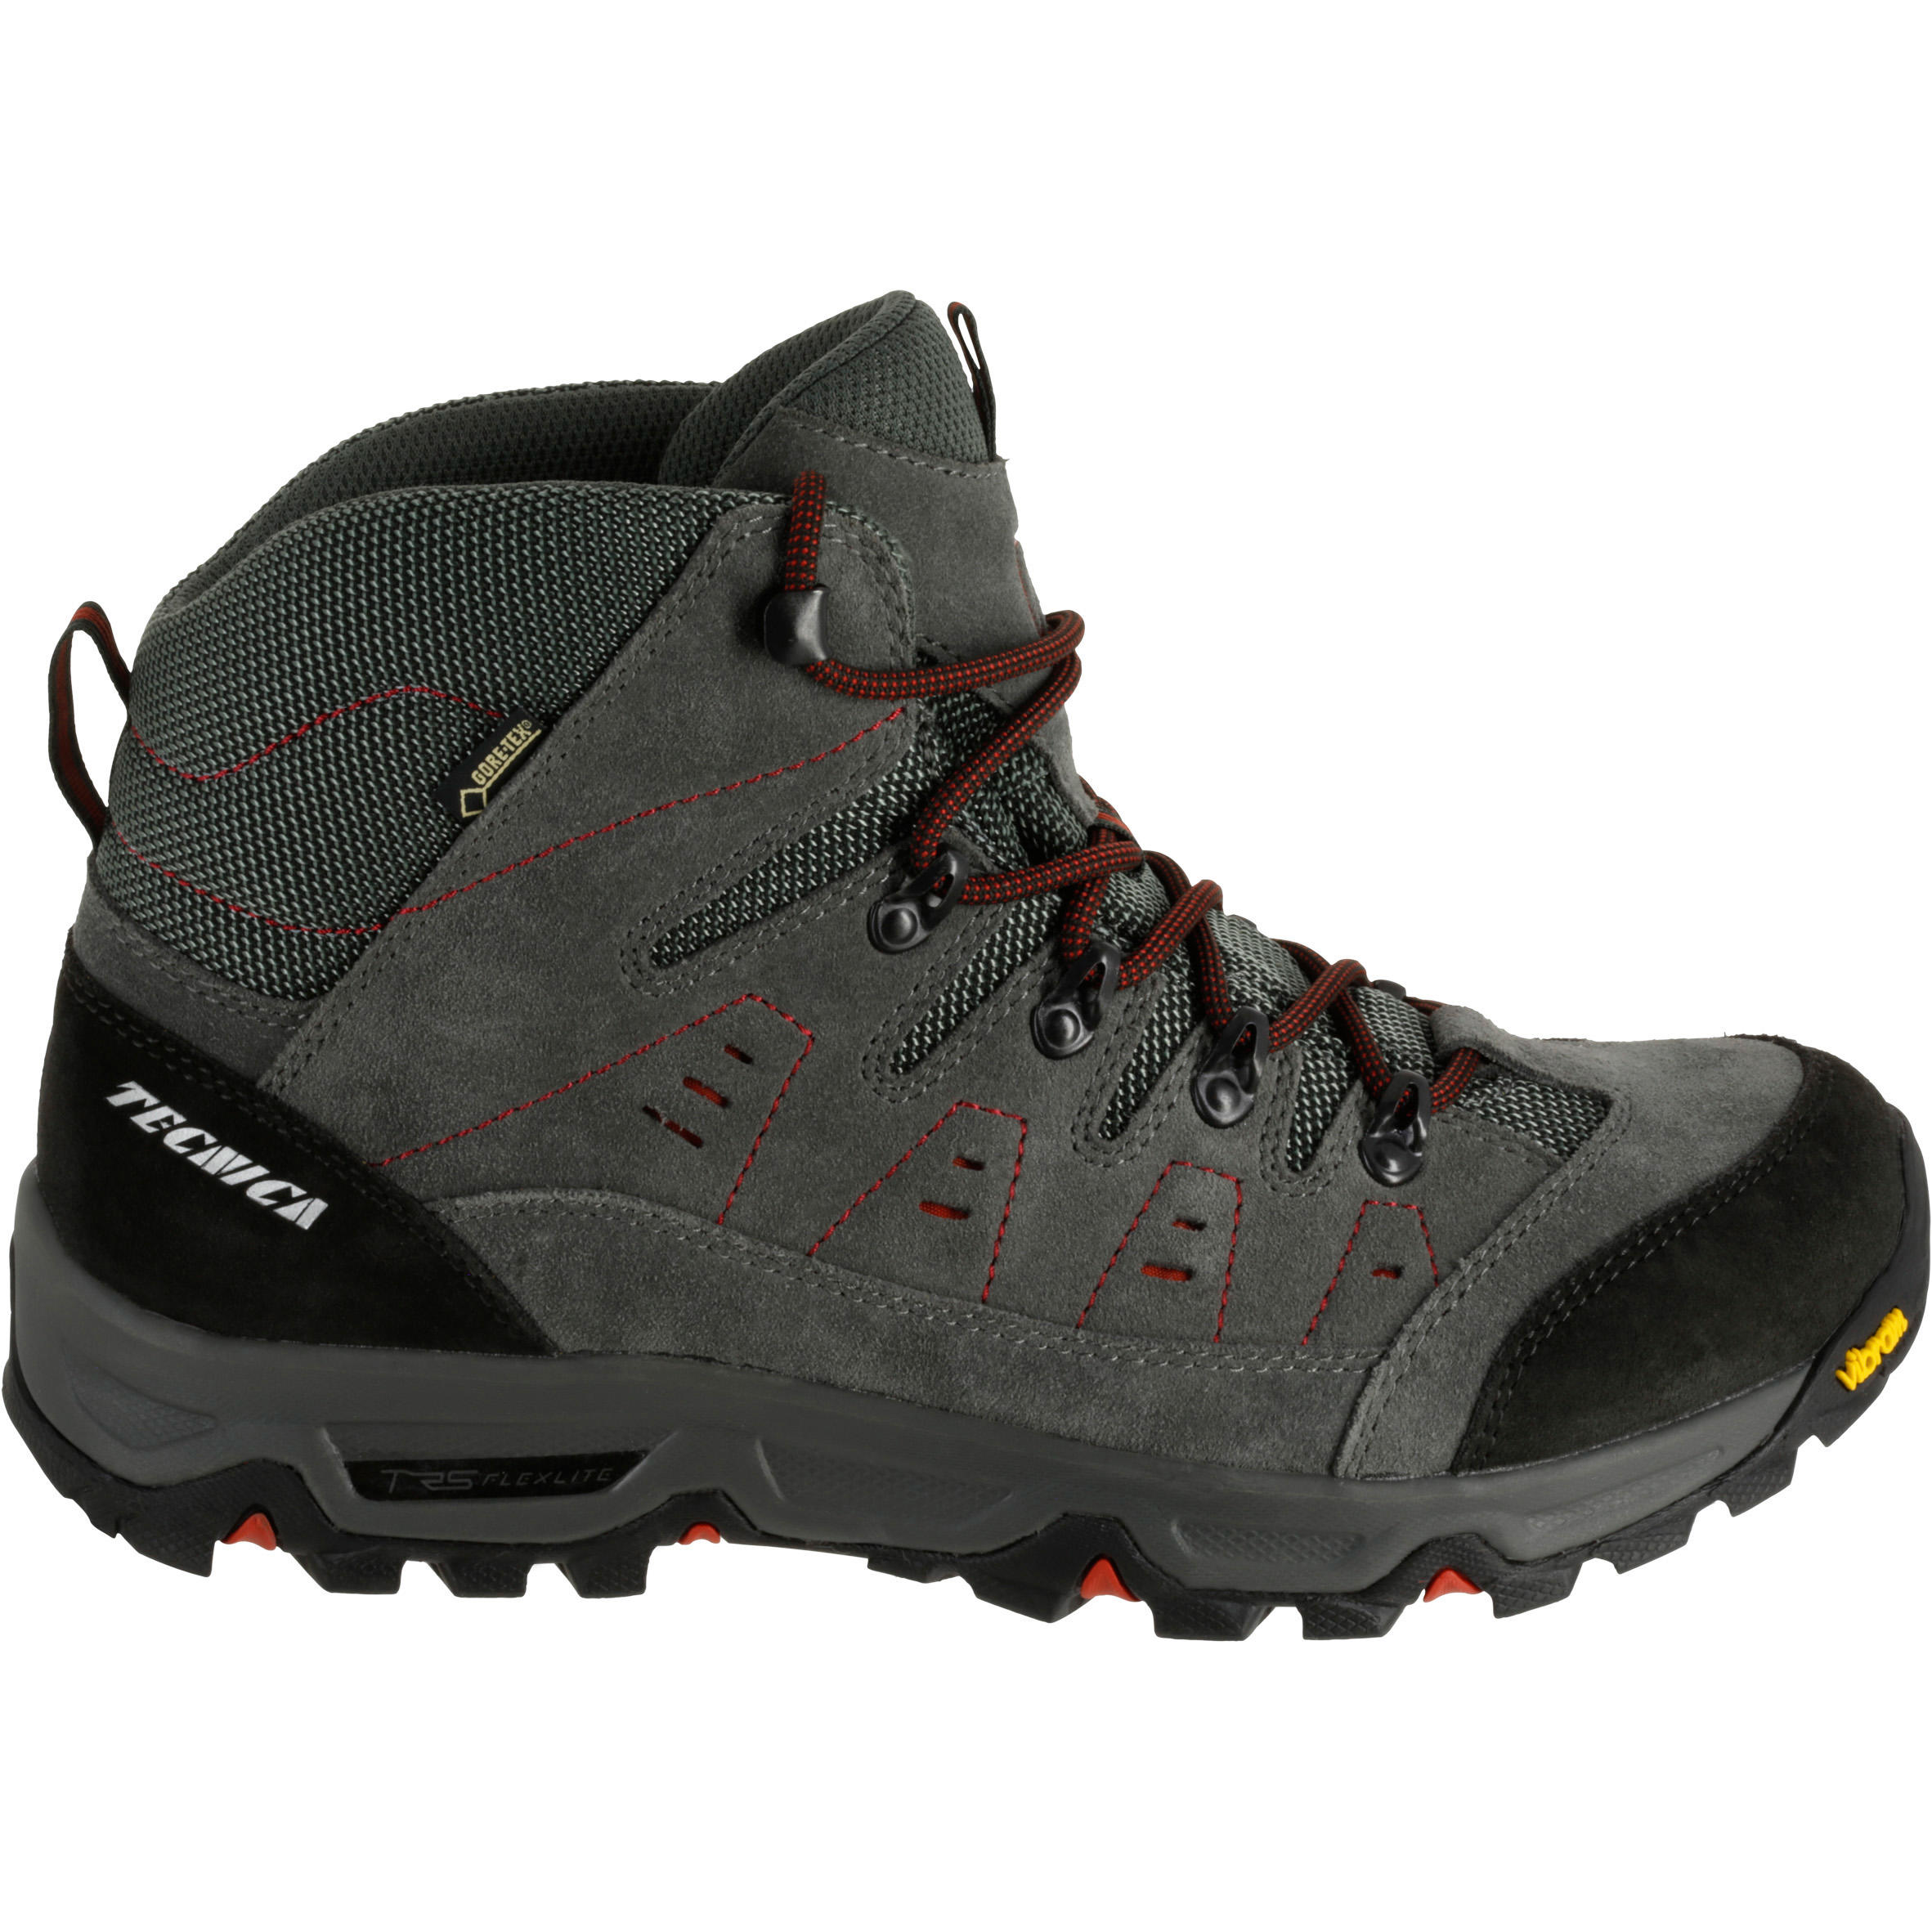 Waterproof Boots - VIBRAM - GTX - TECNICA STARCROSS - Men’s 1/10